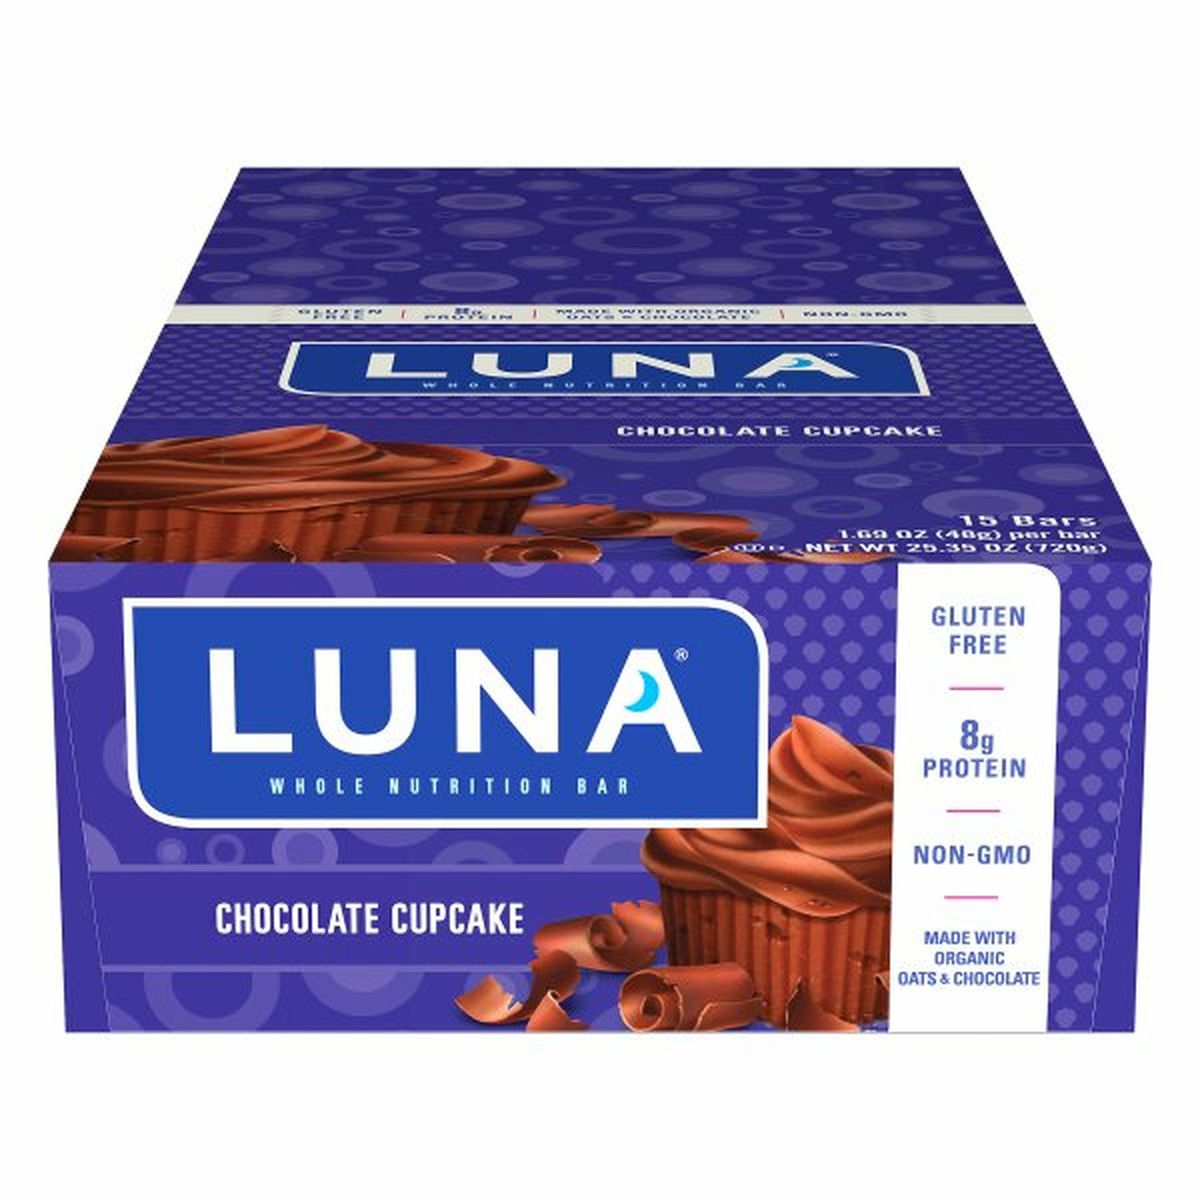 Calories in Luna Nutrition Bar, Chocolate Cupcake